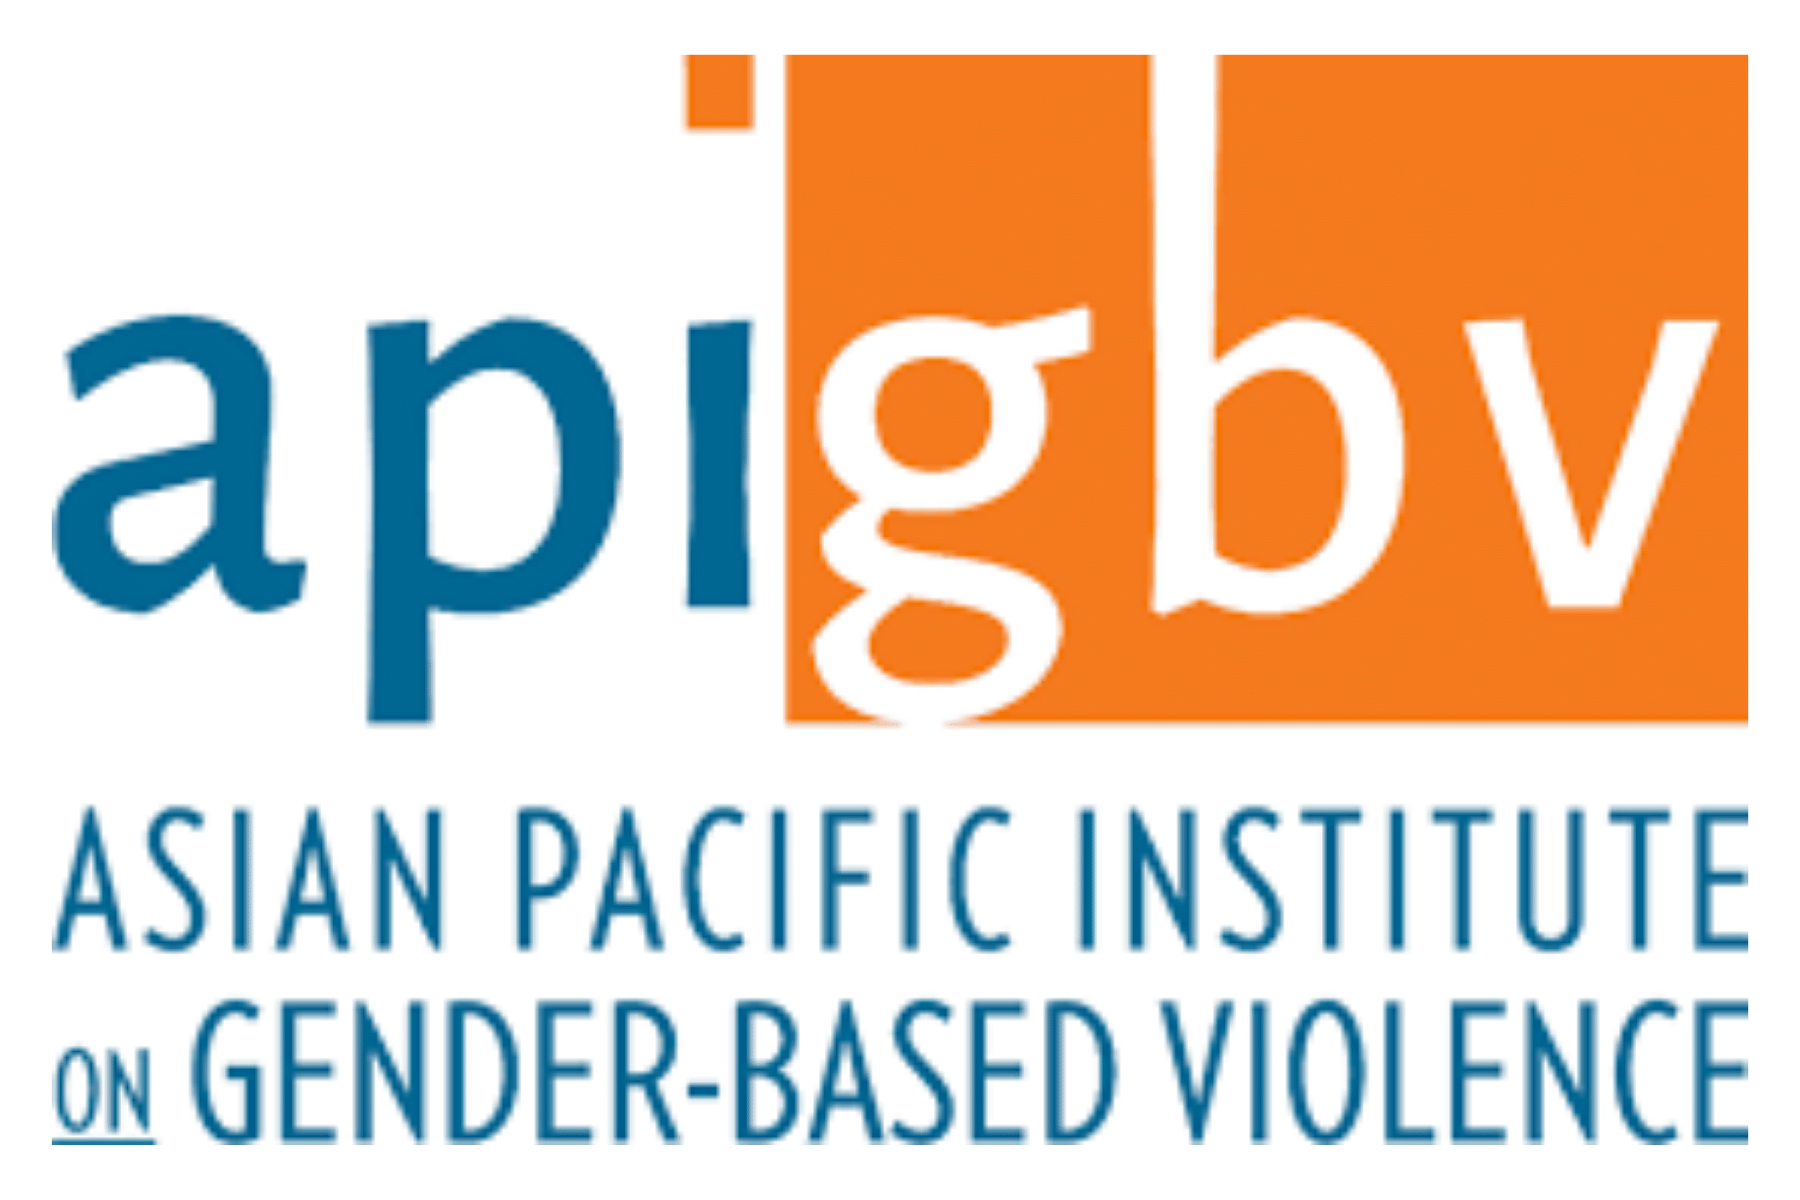 Blue and orange Asian Pacific Institute on Gender-Based Violence logo.